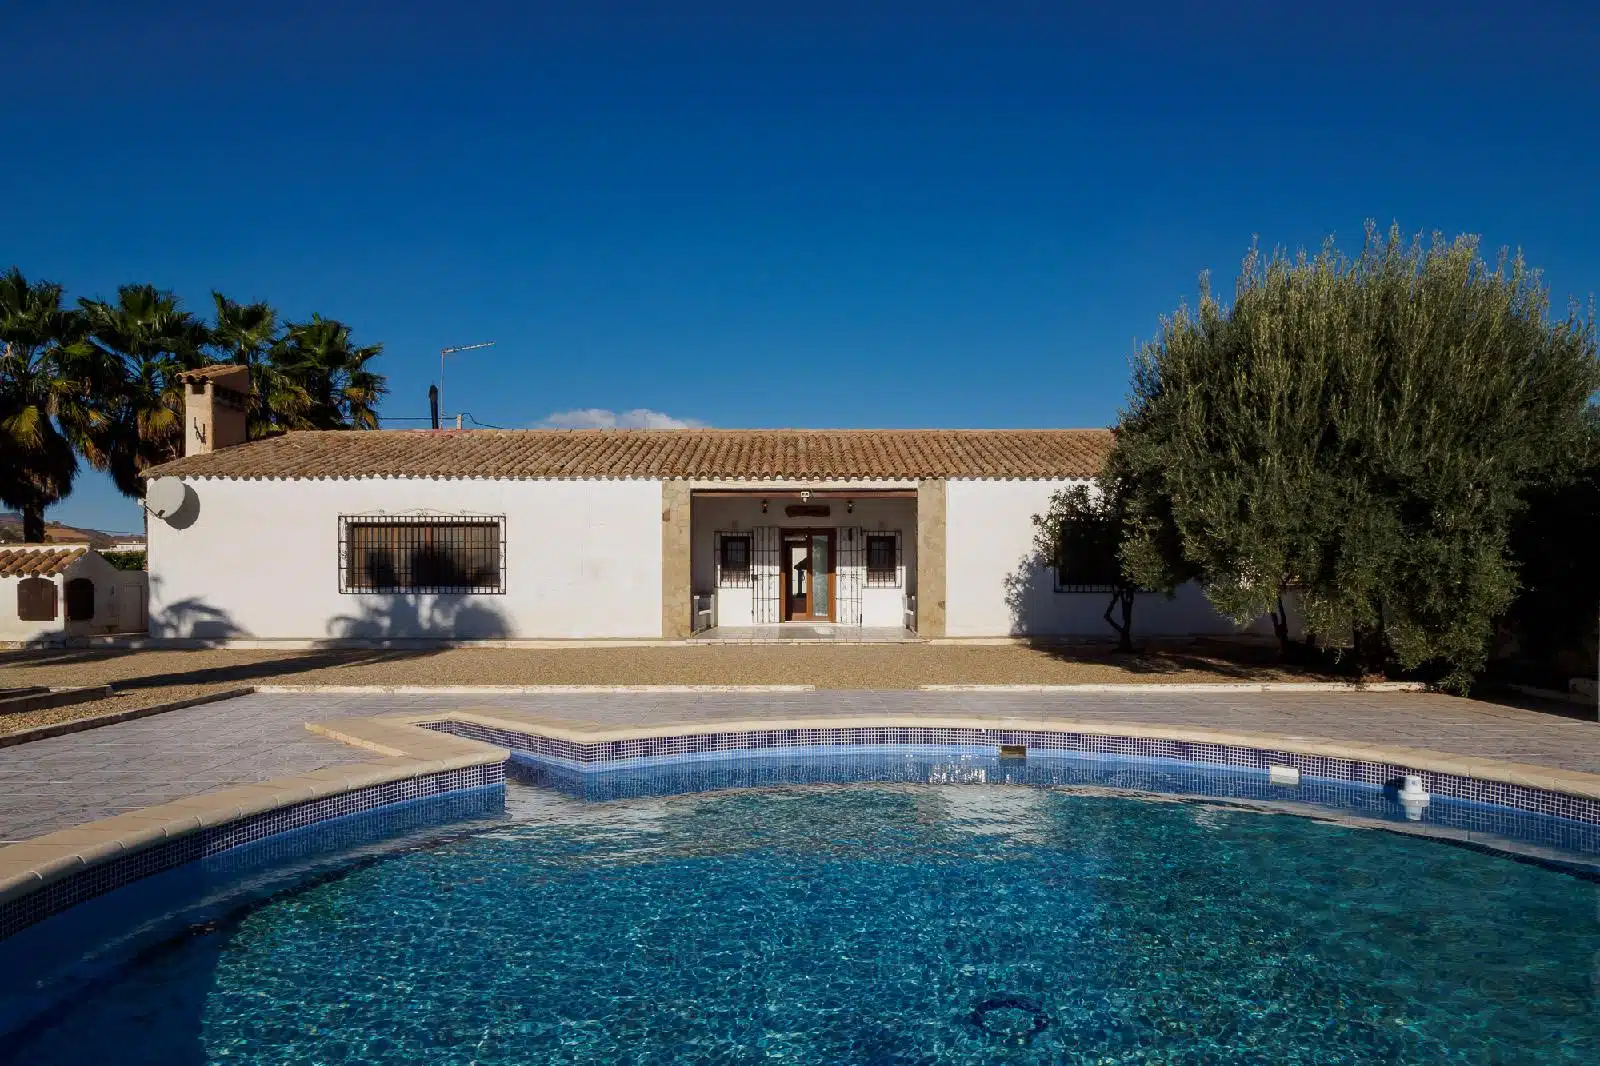 Resale Villa Te koop in Antas in Spanje, gelegen aan de Costa de Almería